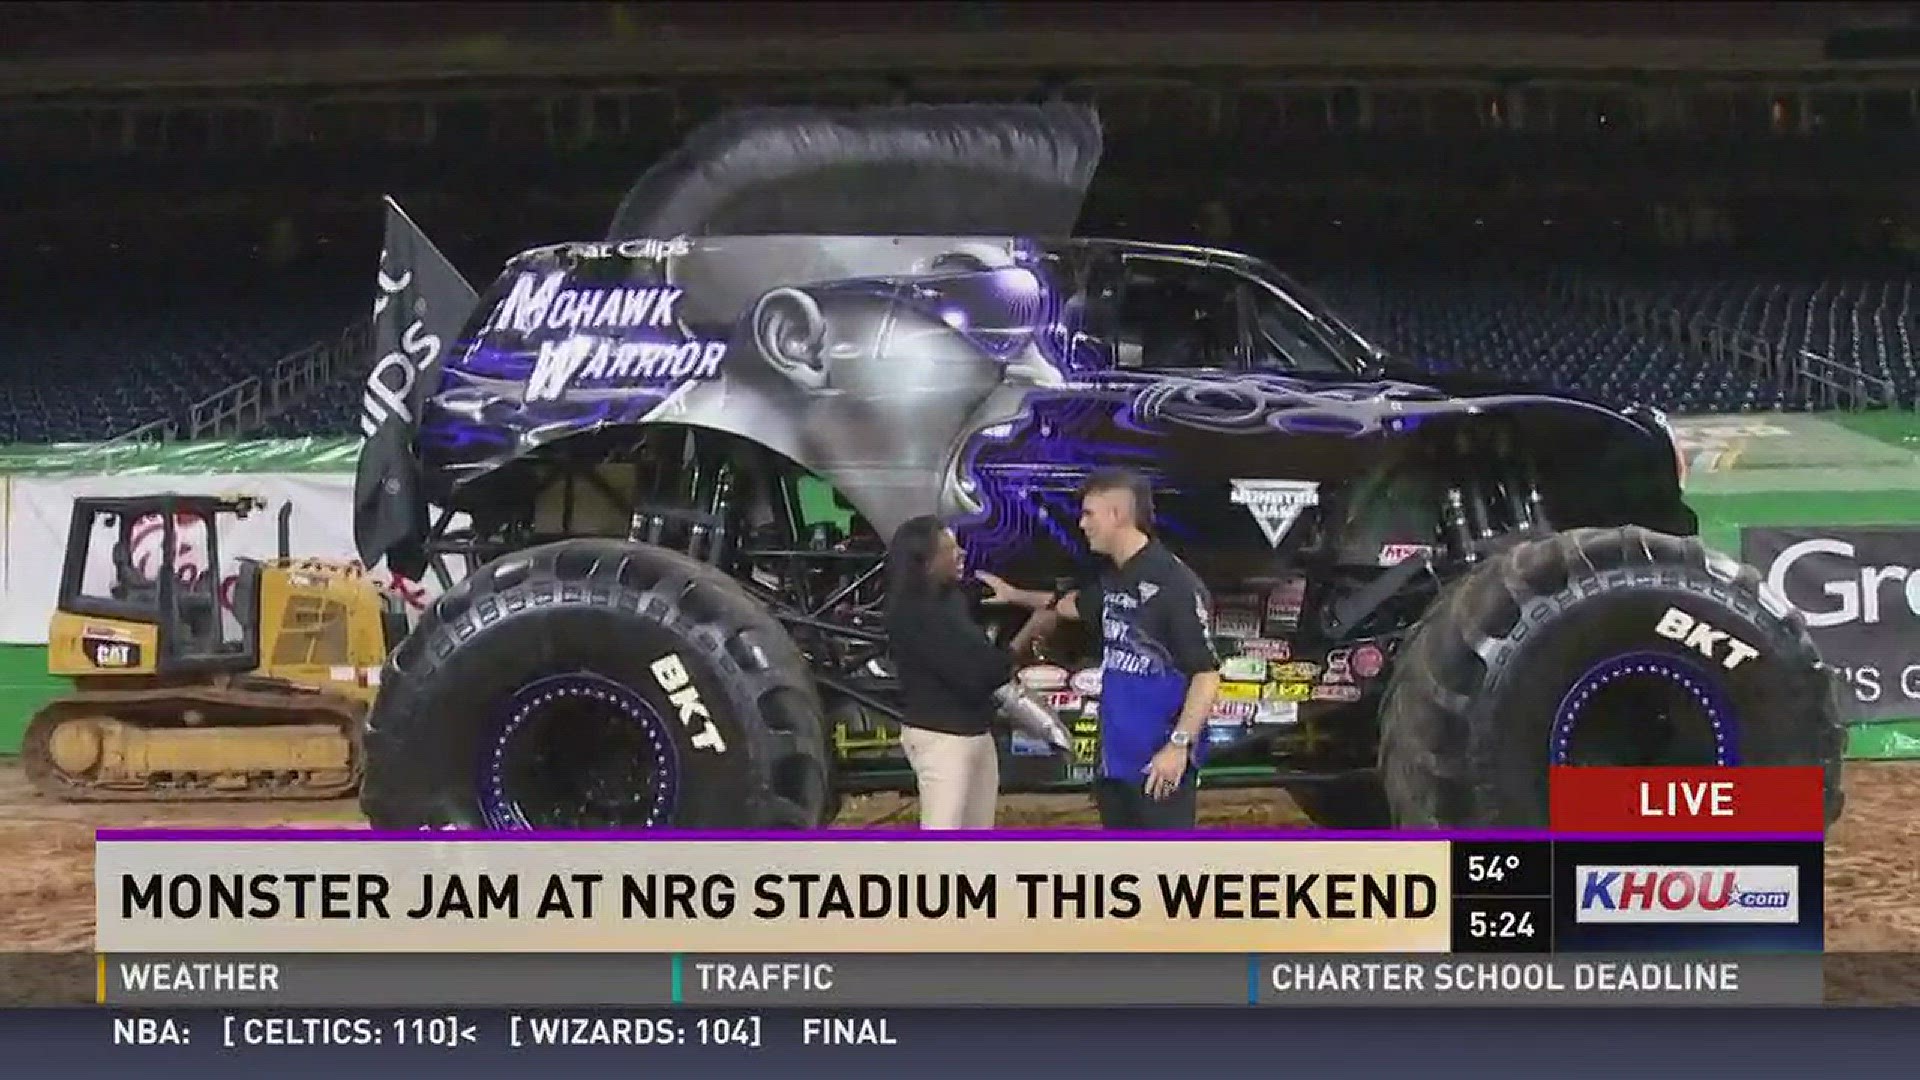 Monster Jam roars into NRG Stadium this weekend